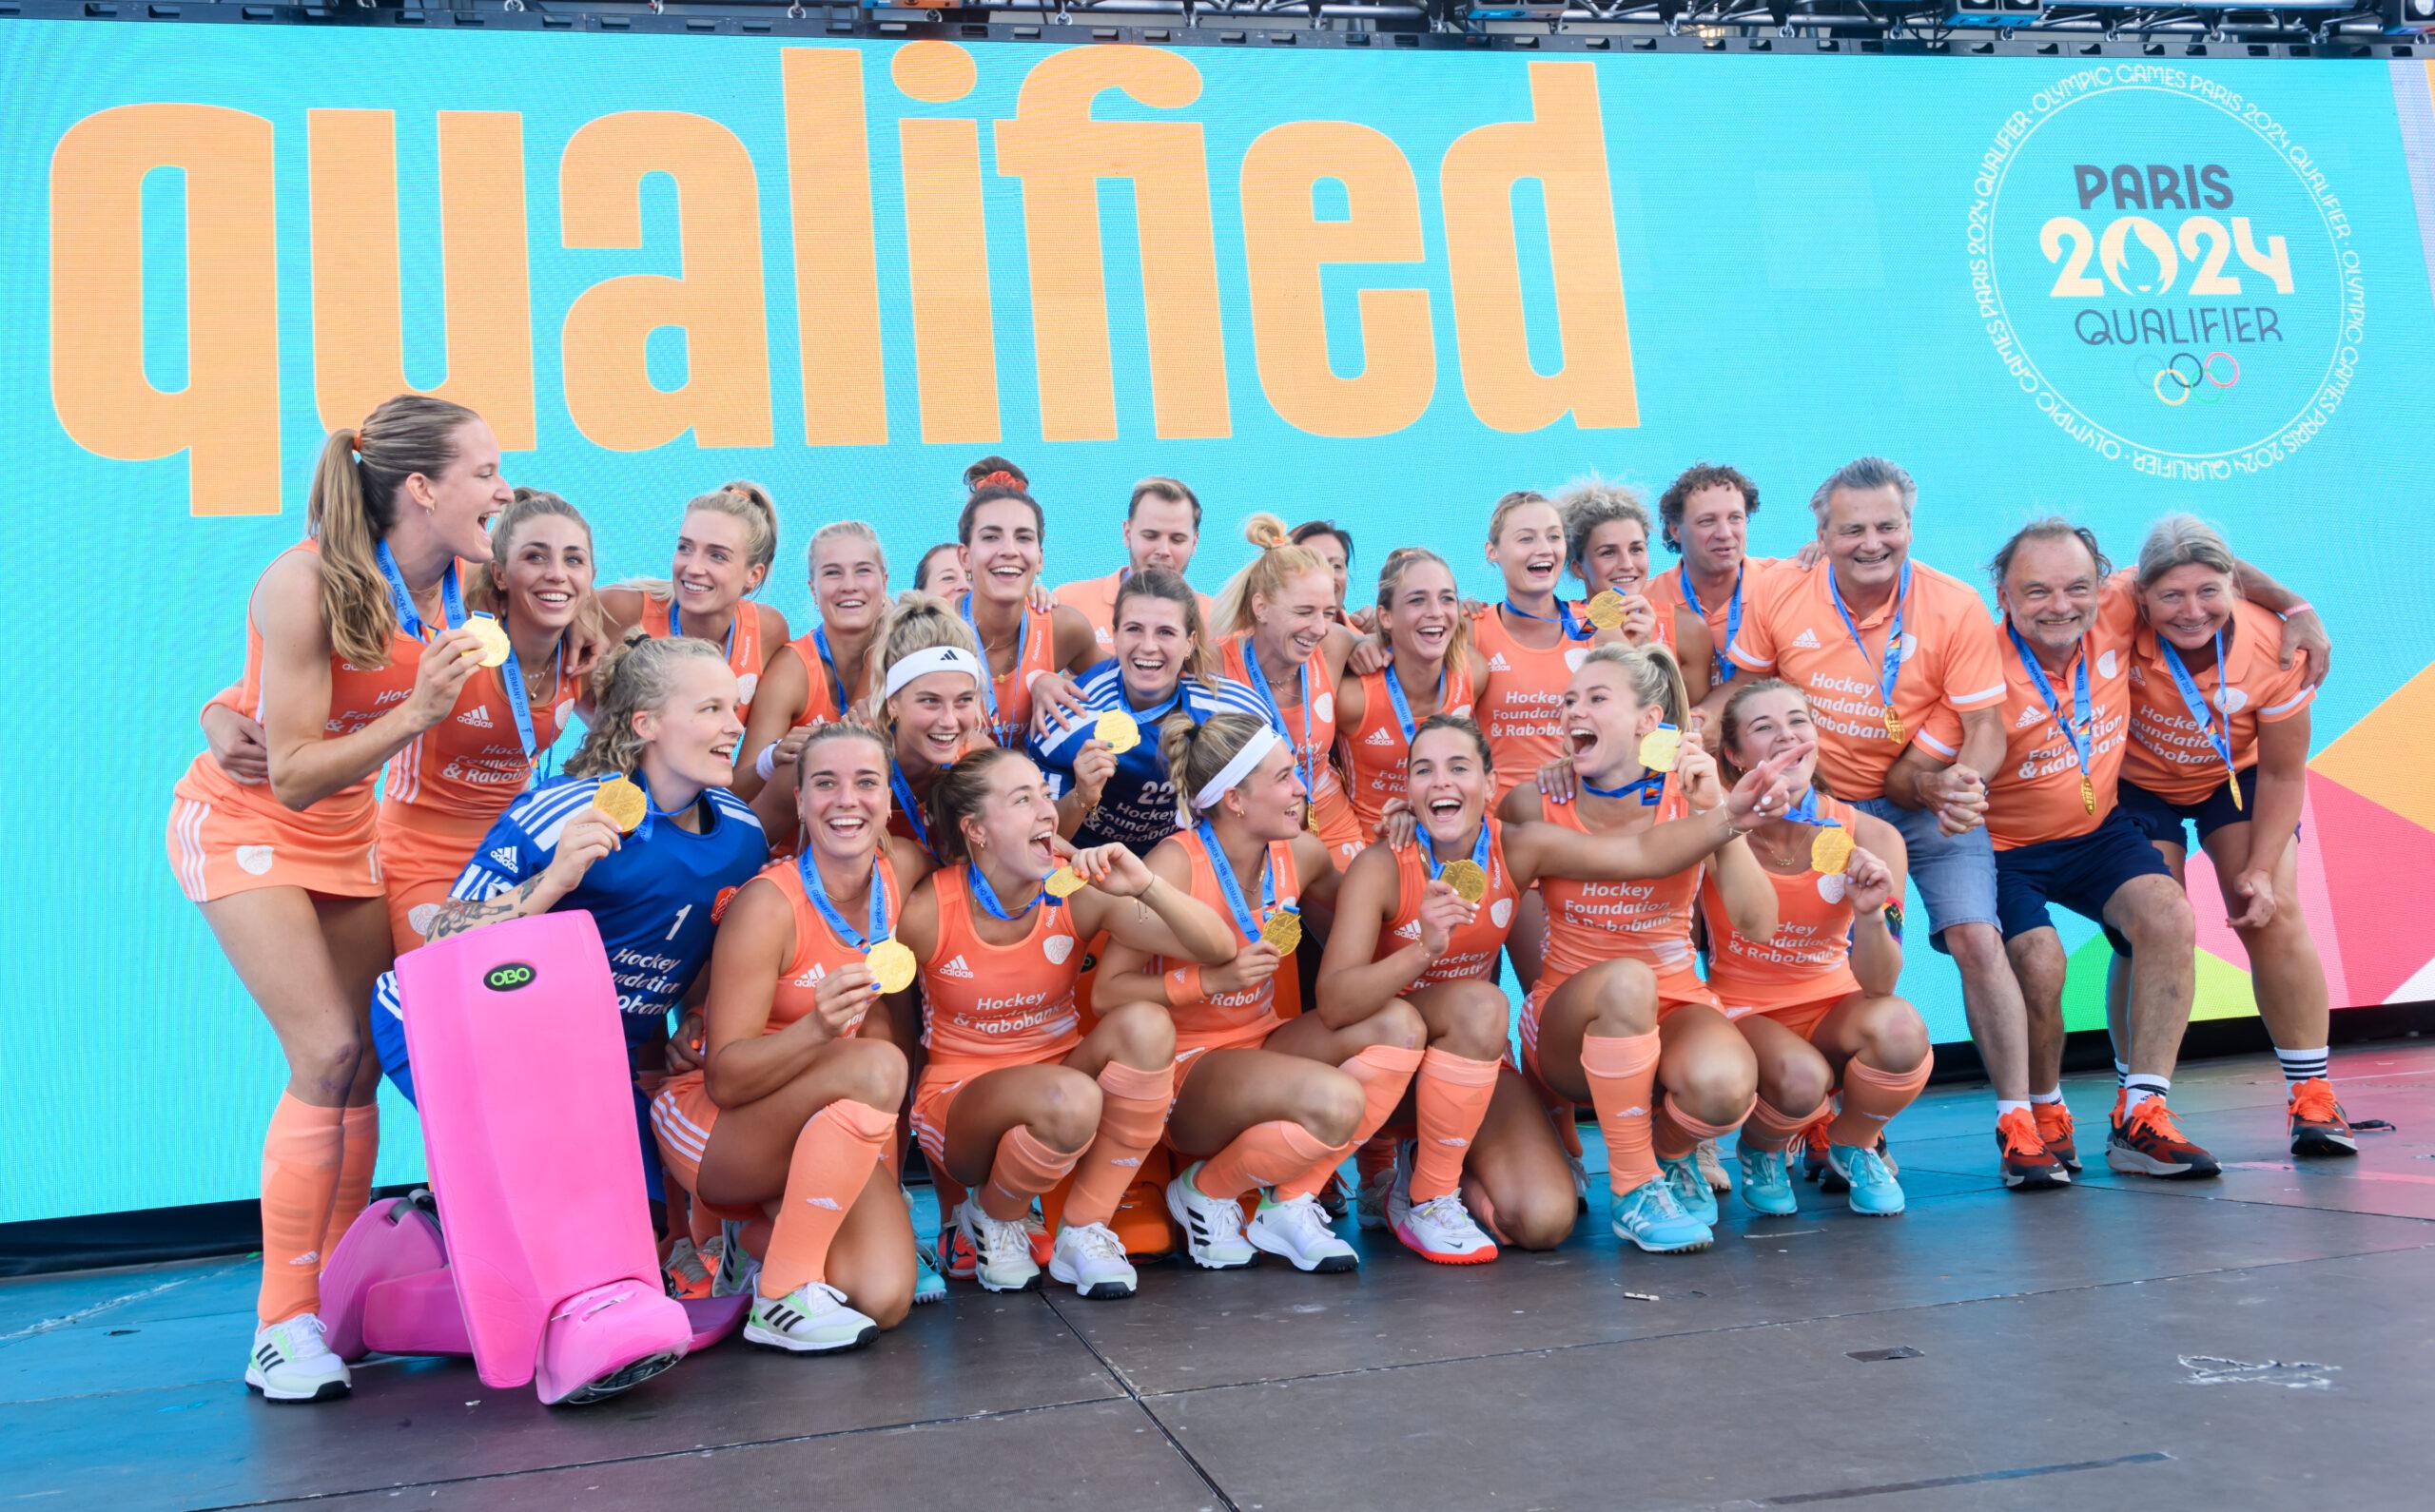 Netherlands continue incredible winning streak in women’s Euro final